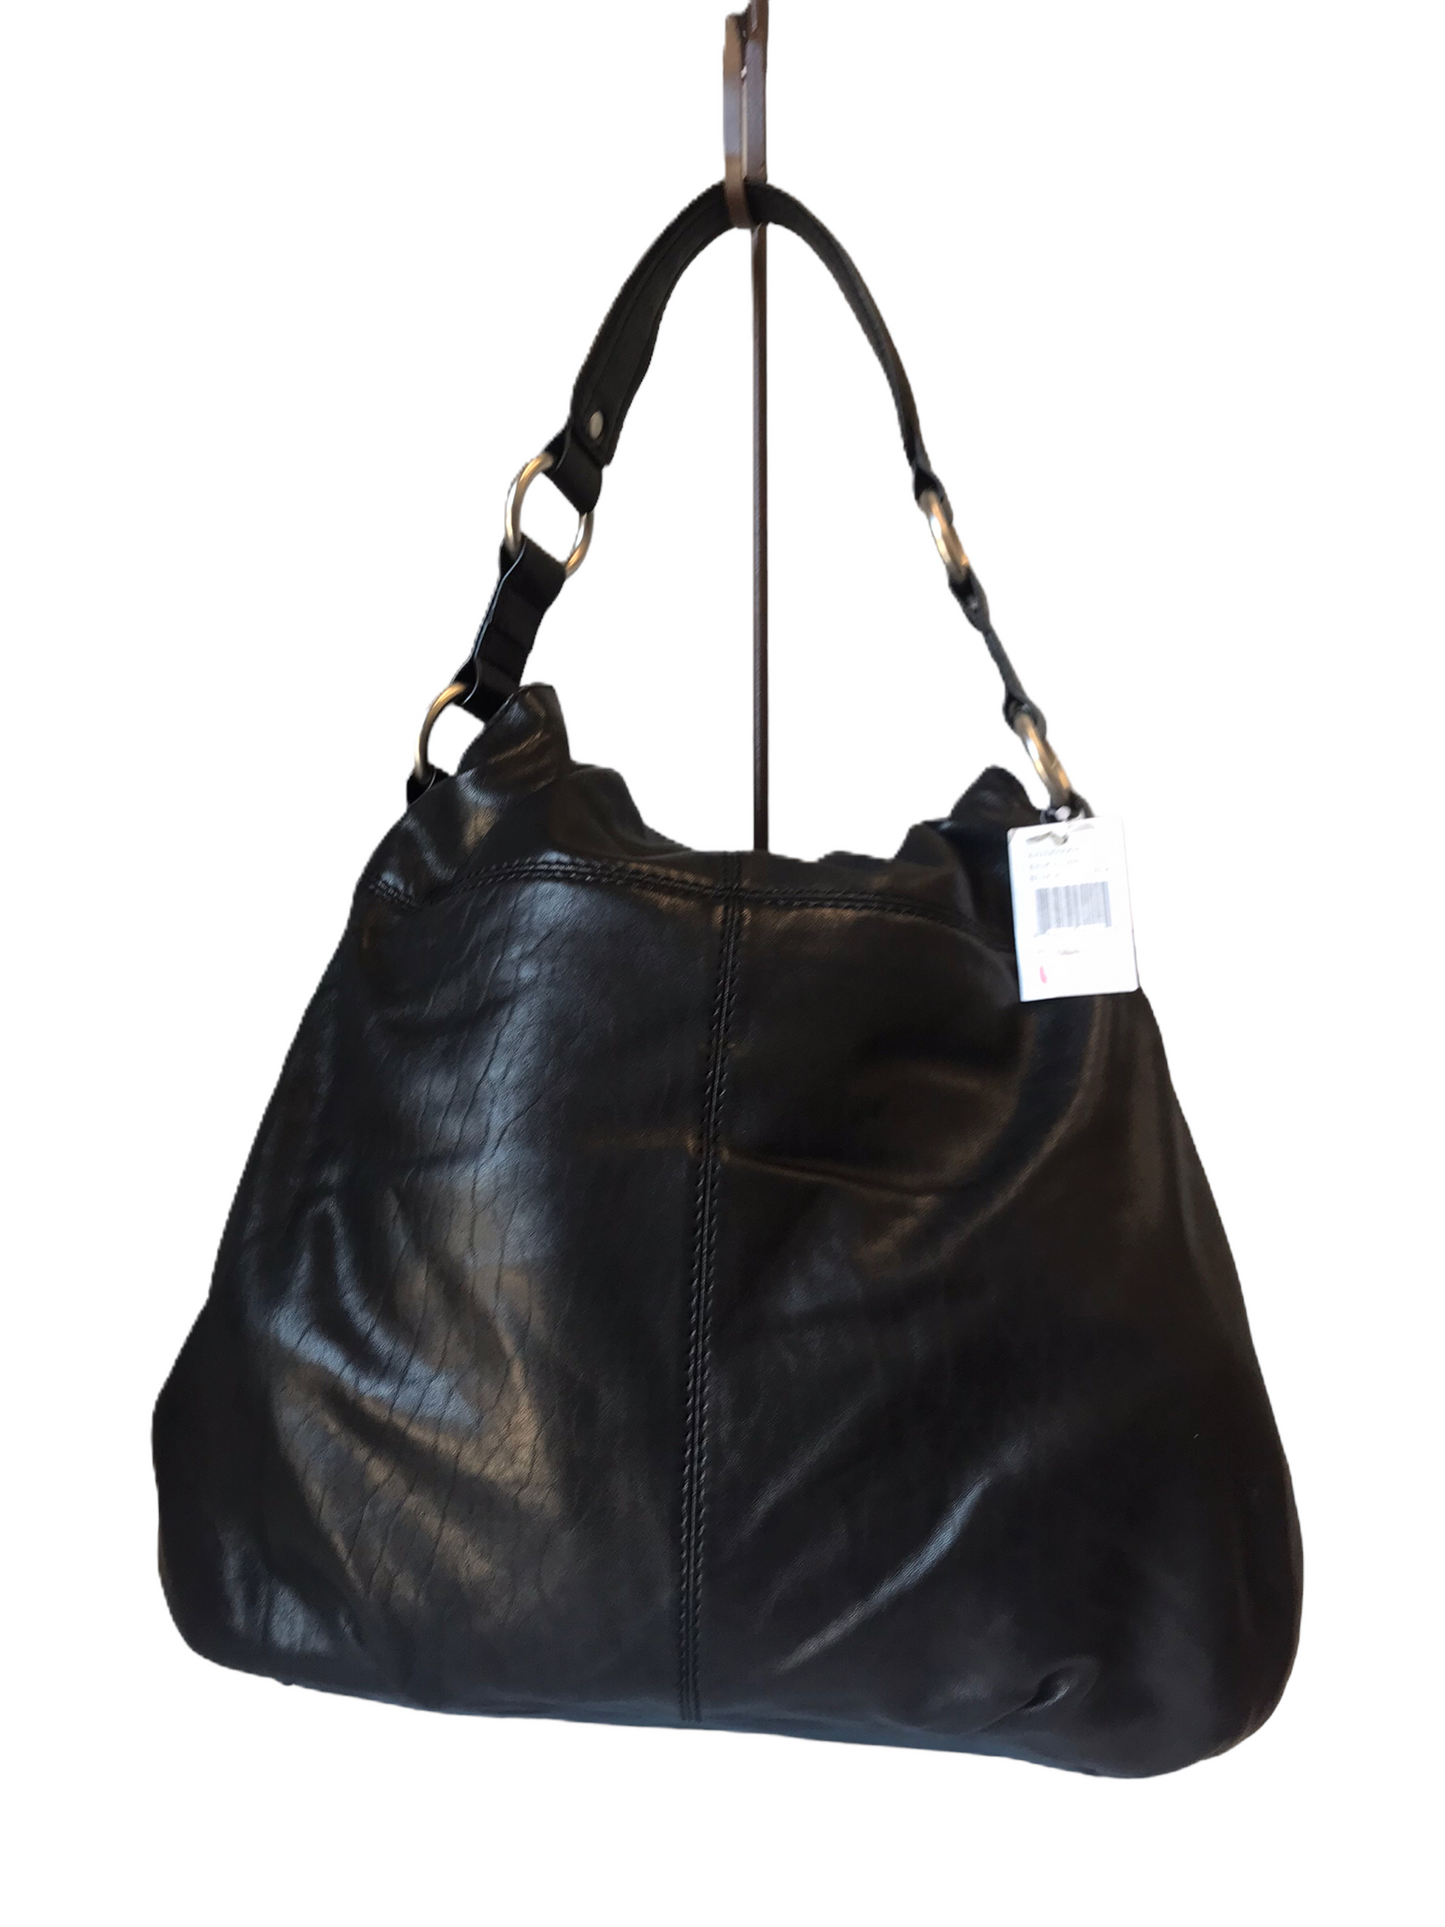 Handbag By Marc New York, Size: Large